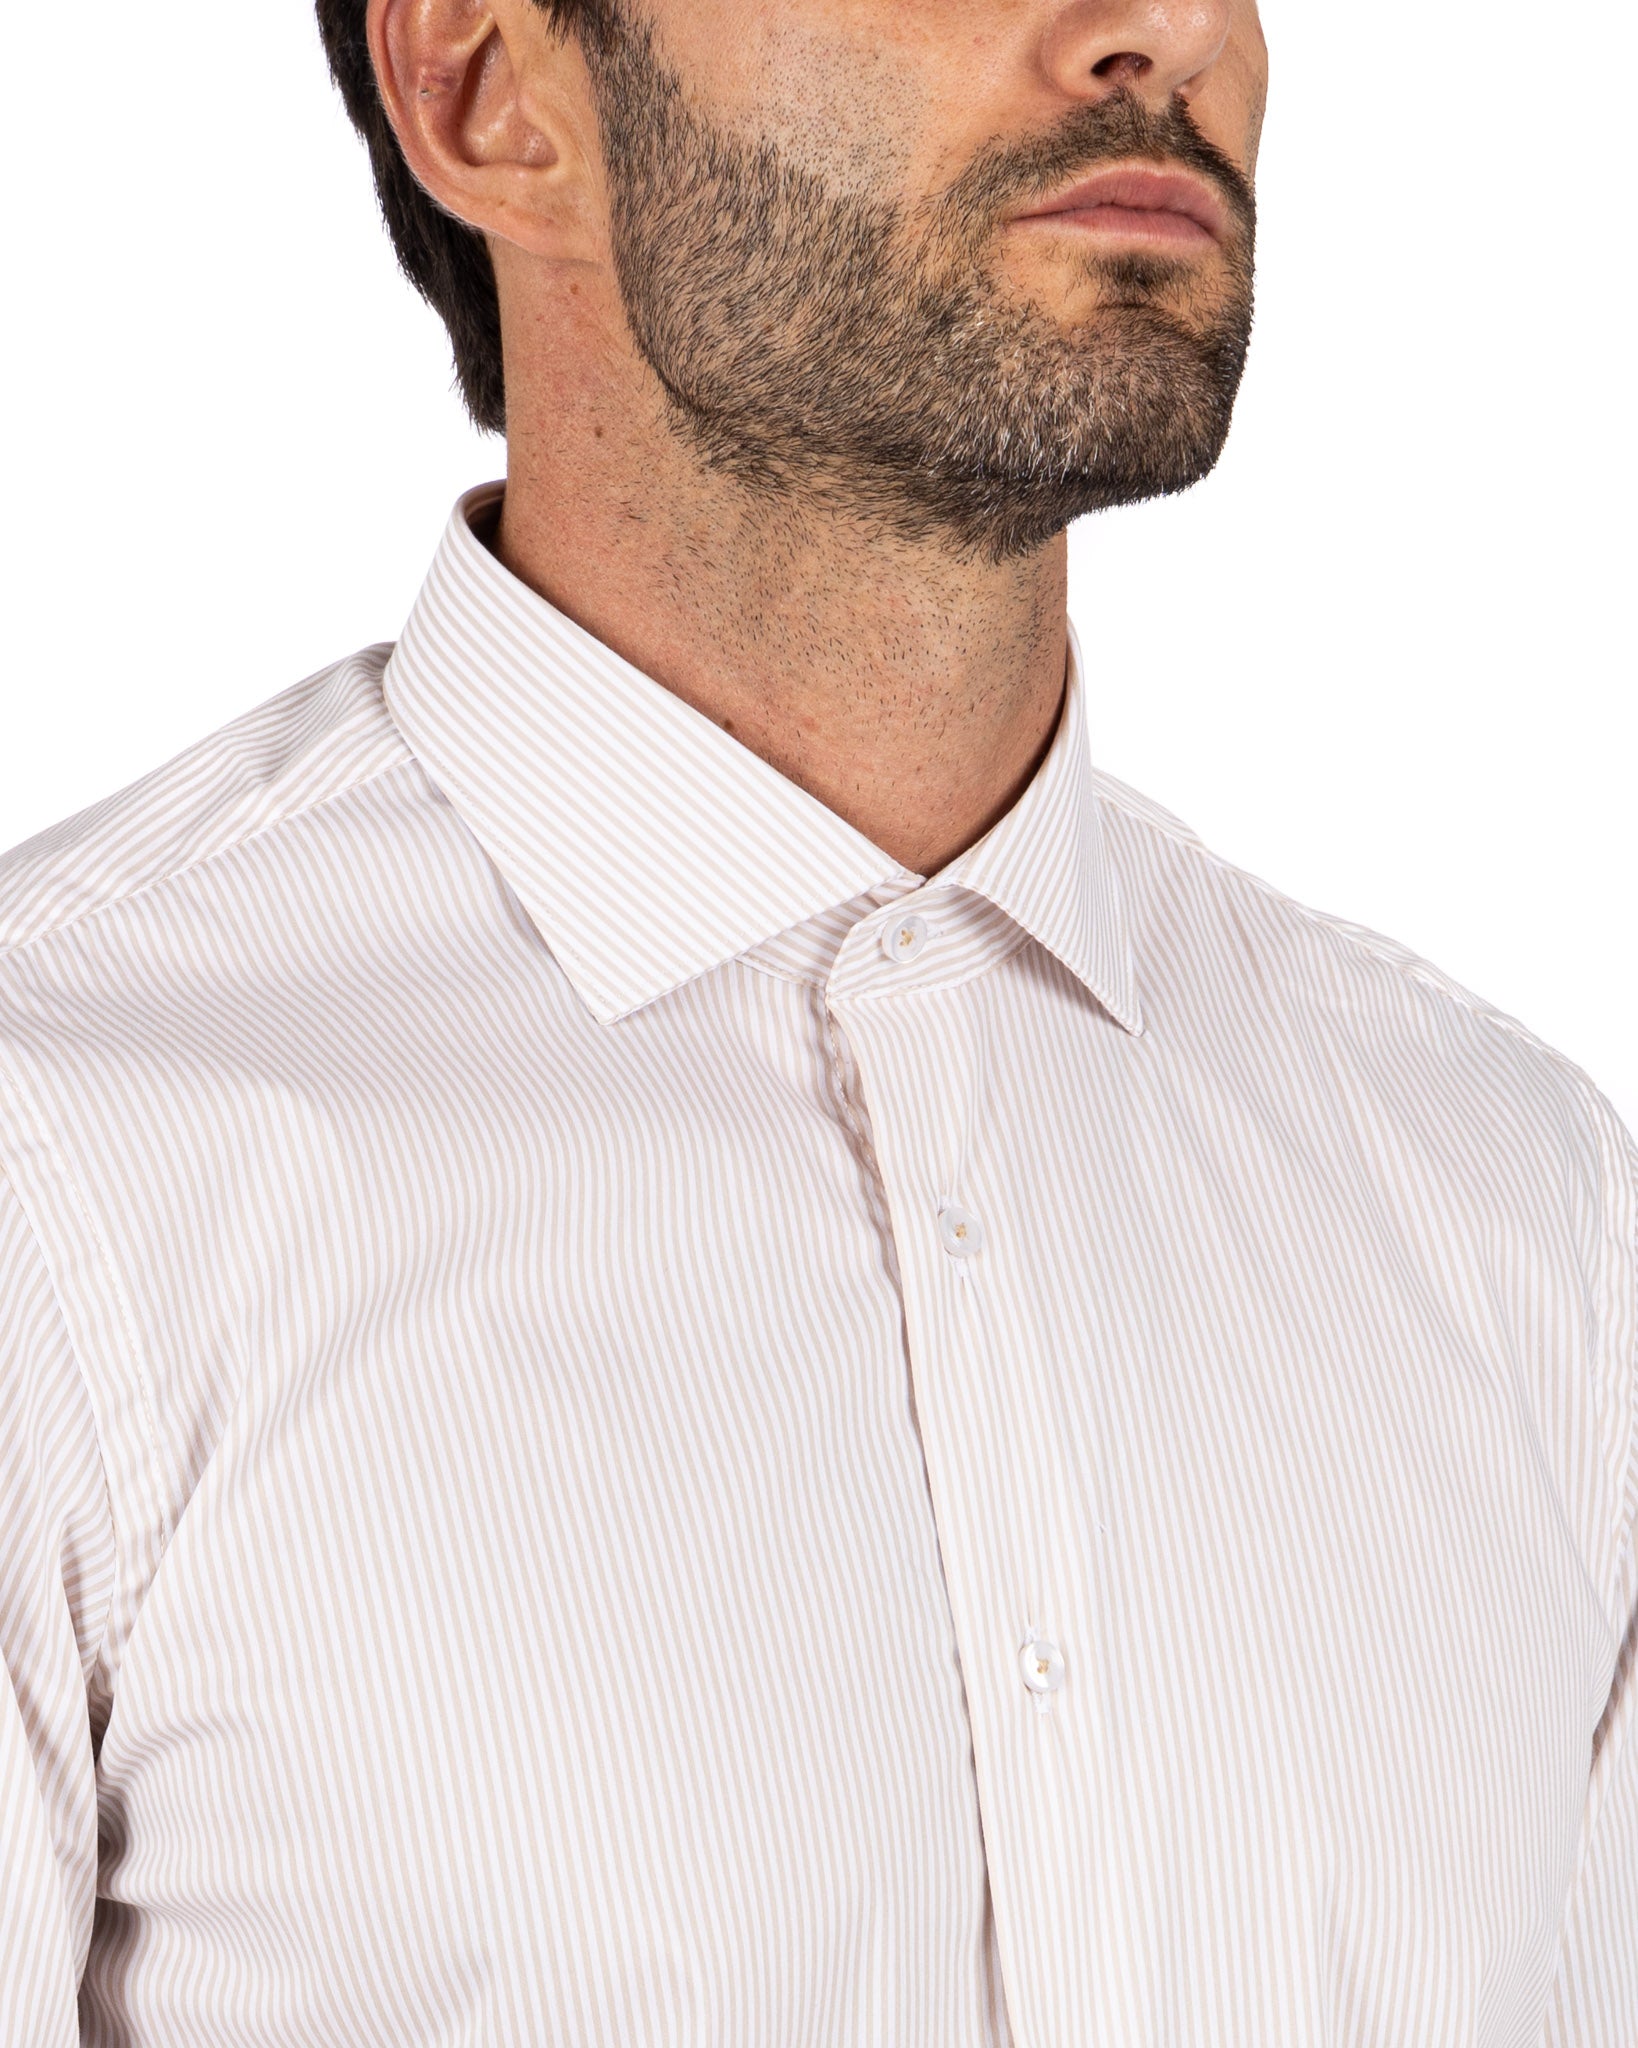 Shirt - classic basic beige narrow stripe in cotton